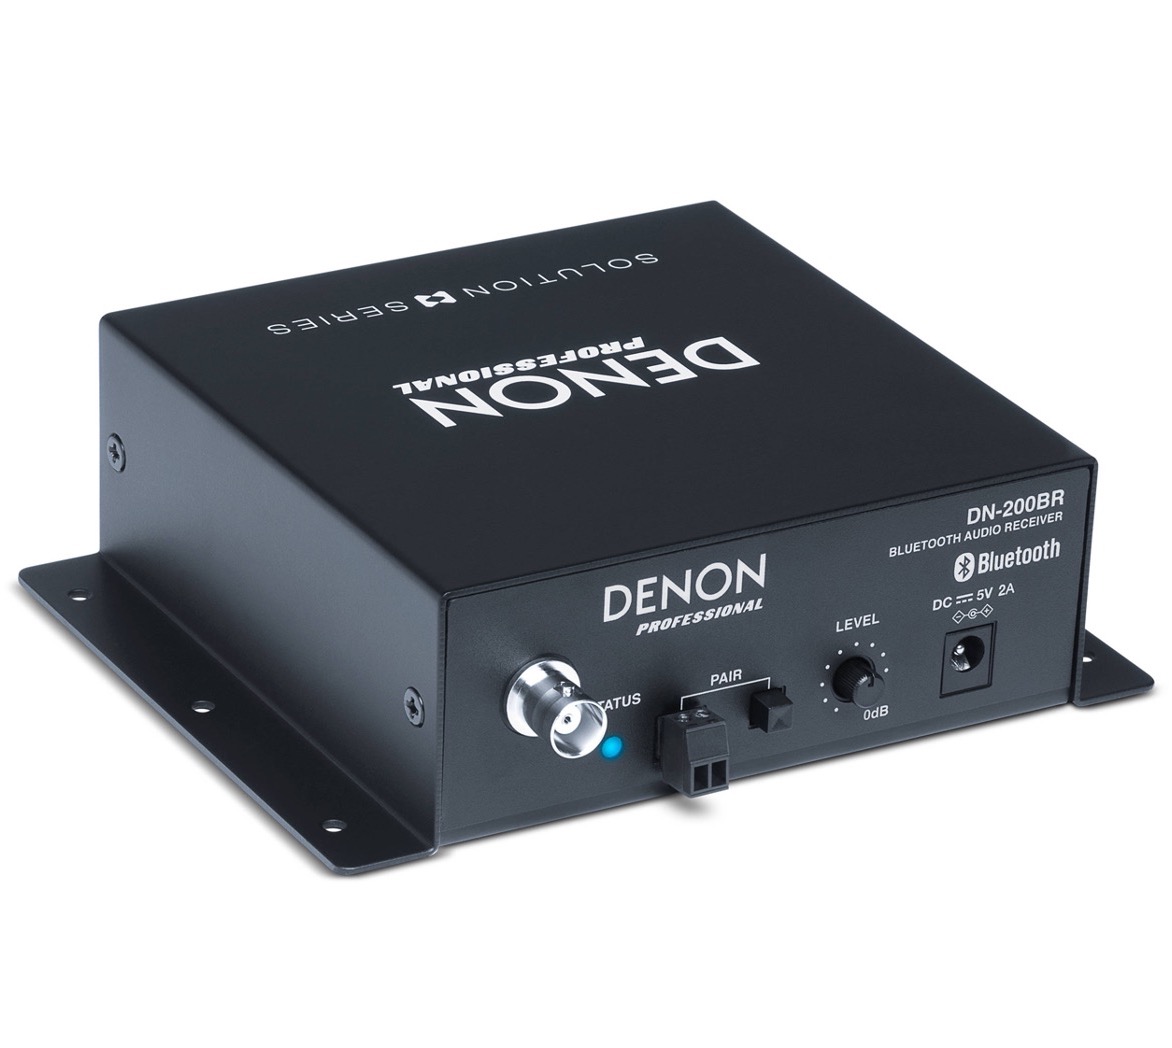 Denon Professional DN-200BR Bluetooth Receiver